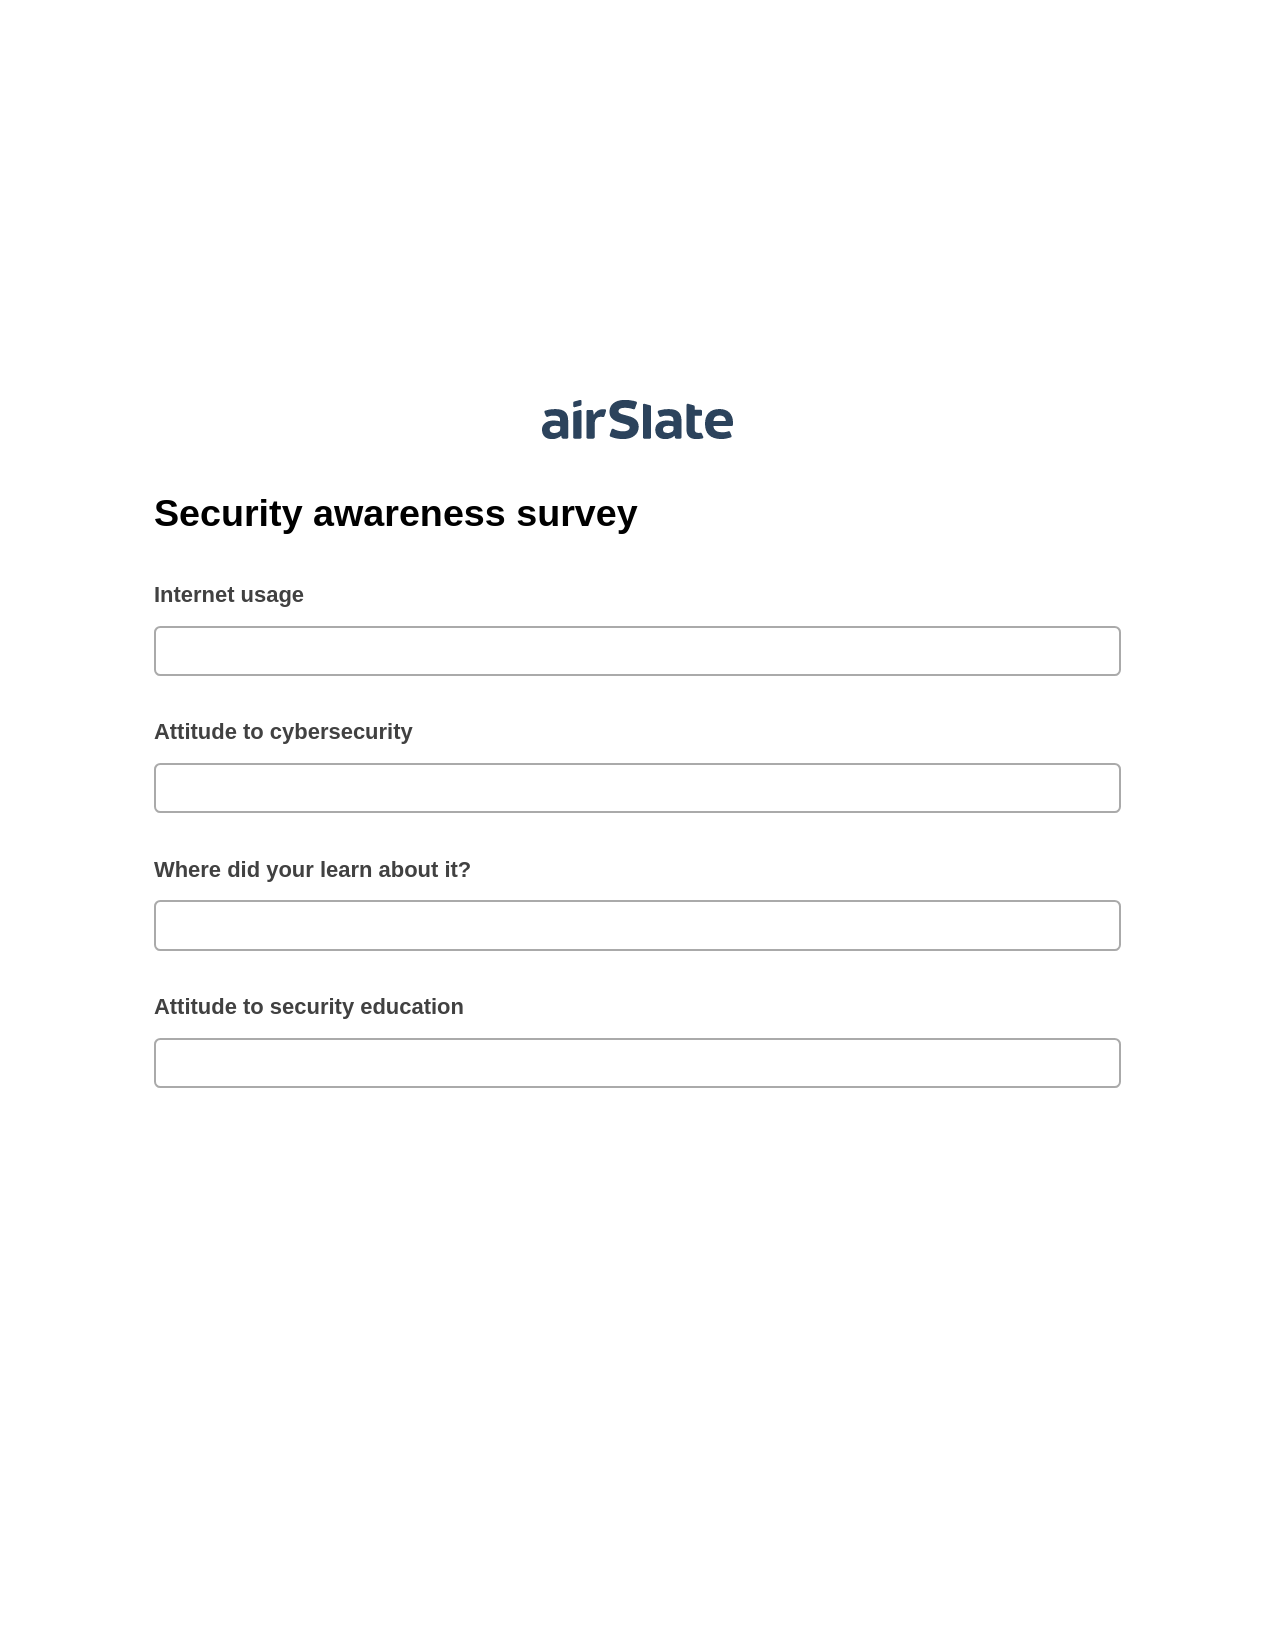 Multirole Security awareness survey Pre-fill from Google Sheet Dropdown Options Bot, Webhook Bot, OneDrive Bot